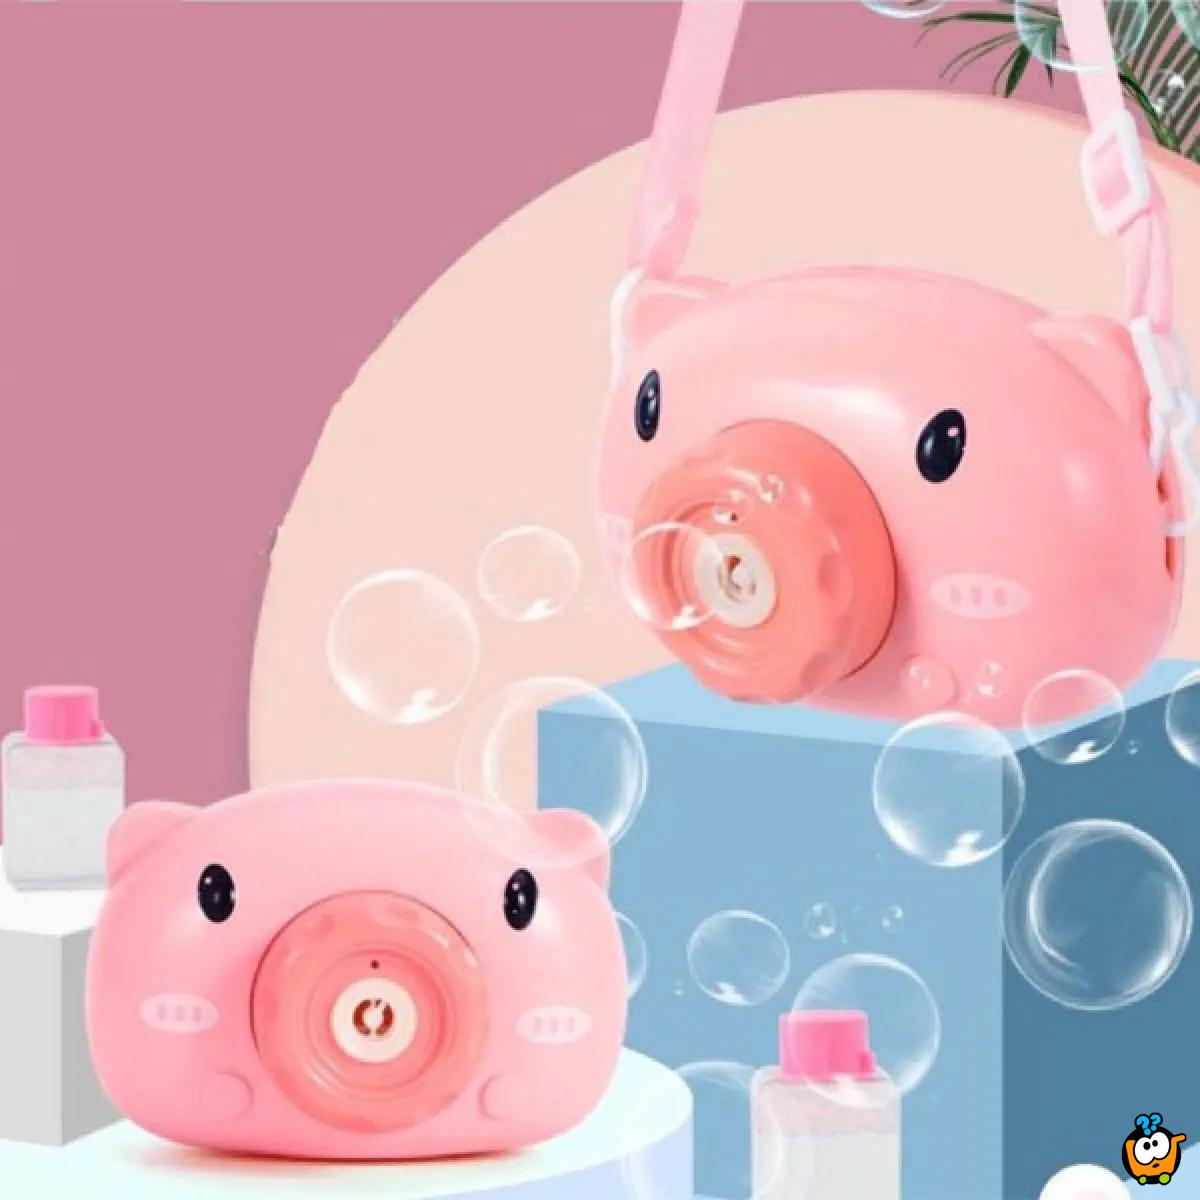 Bubble Pig - Muzičko prasence koje pravi mehuriće